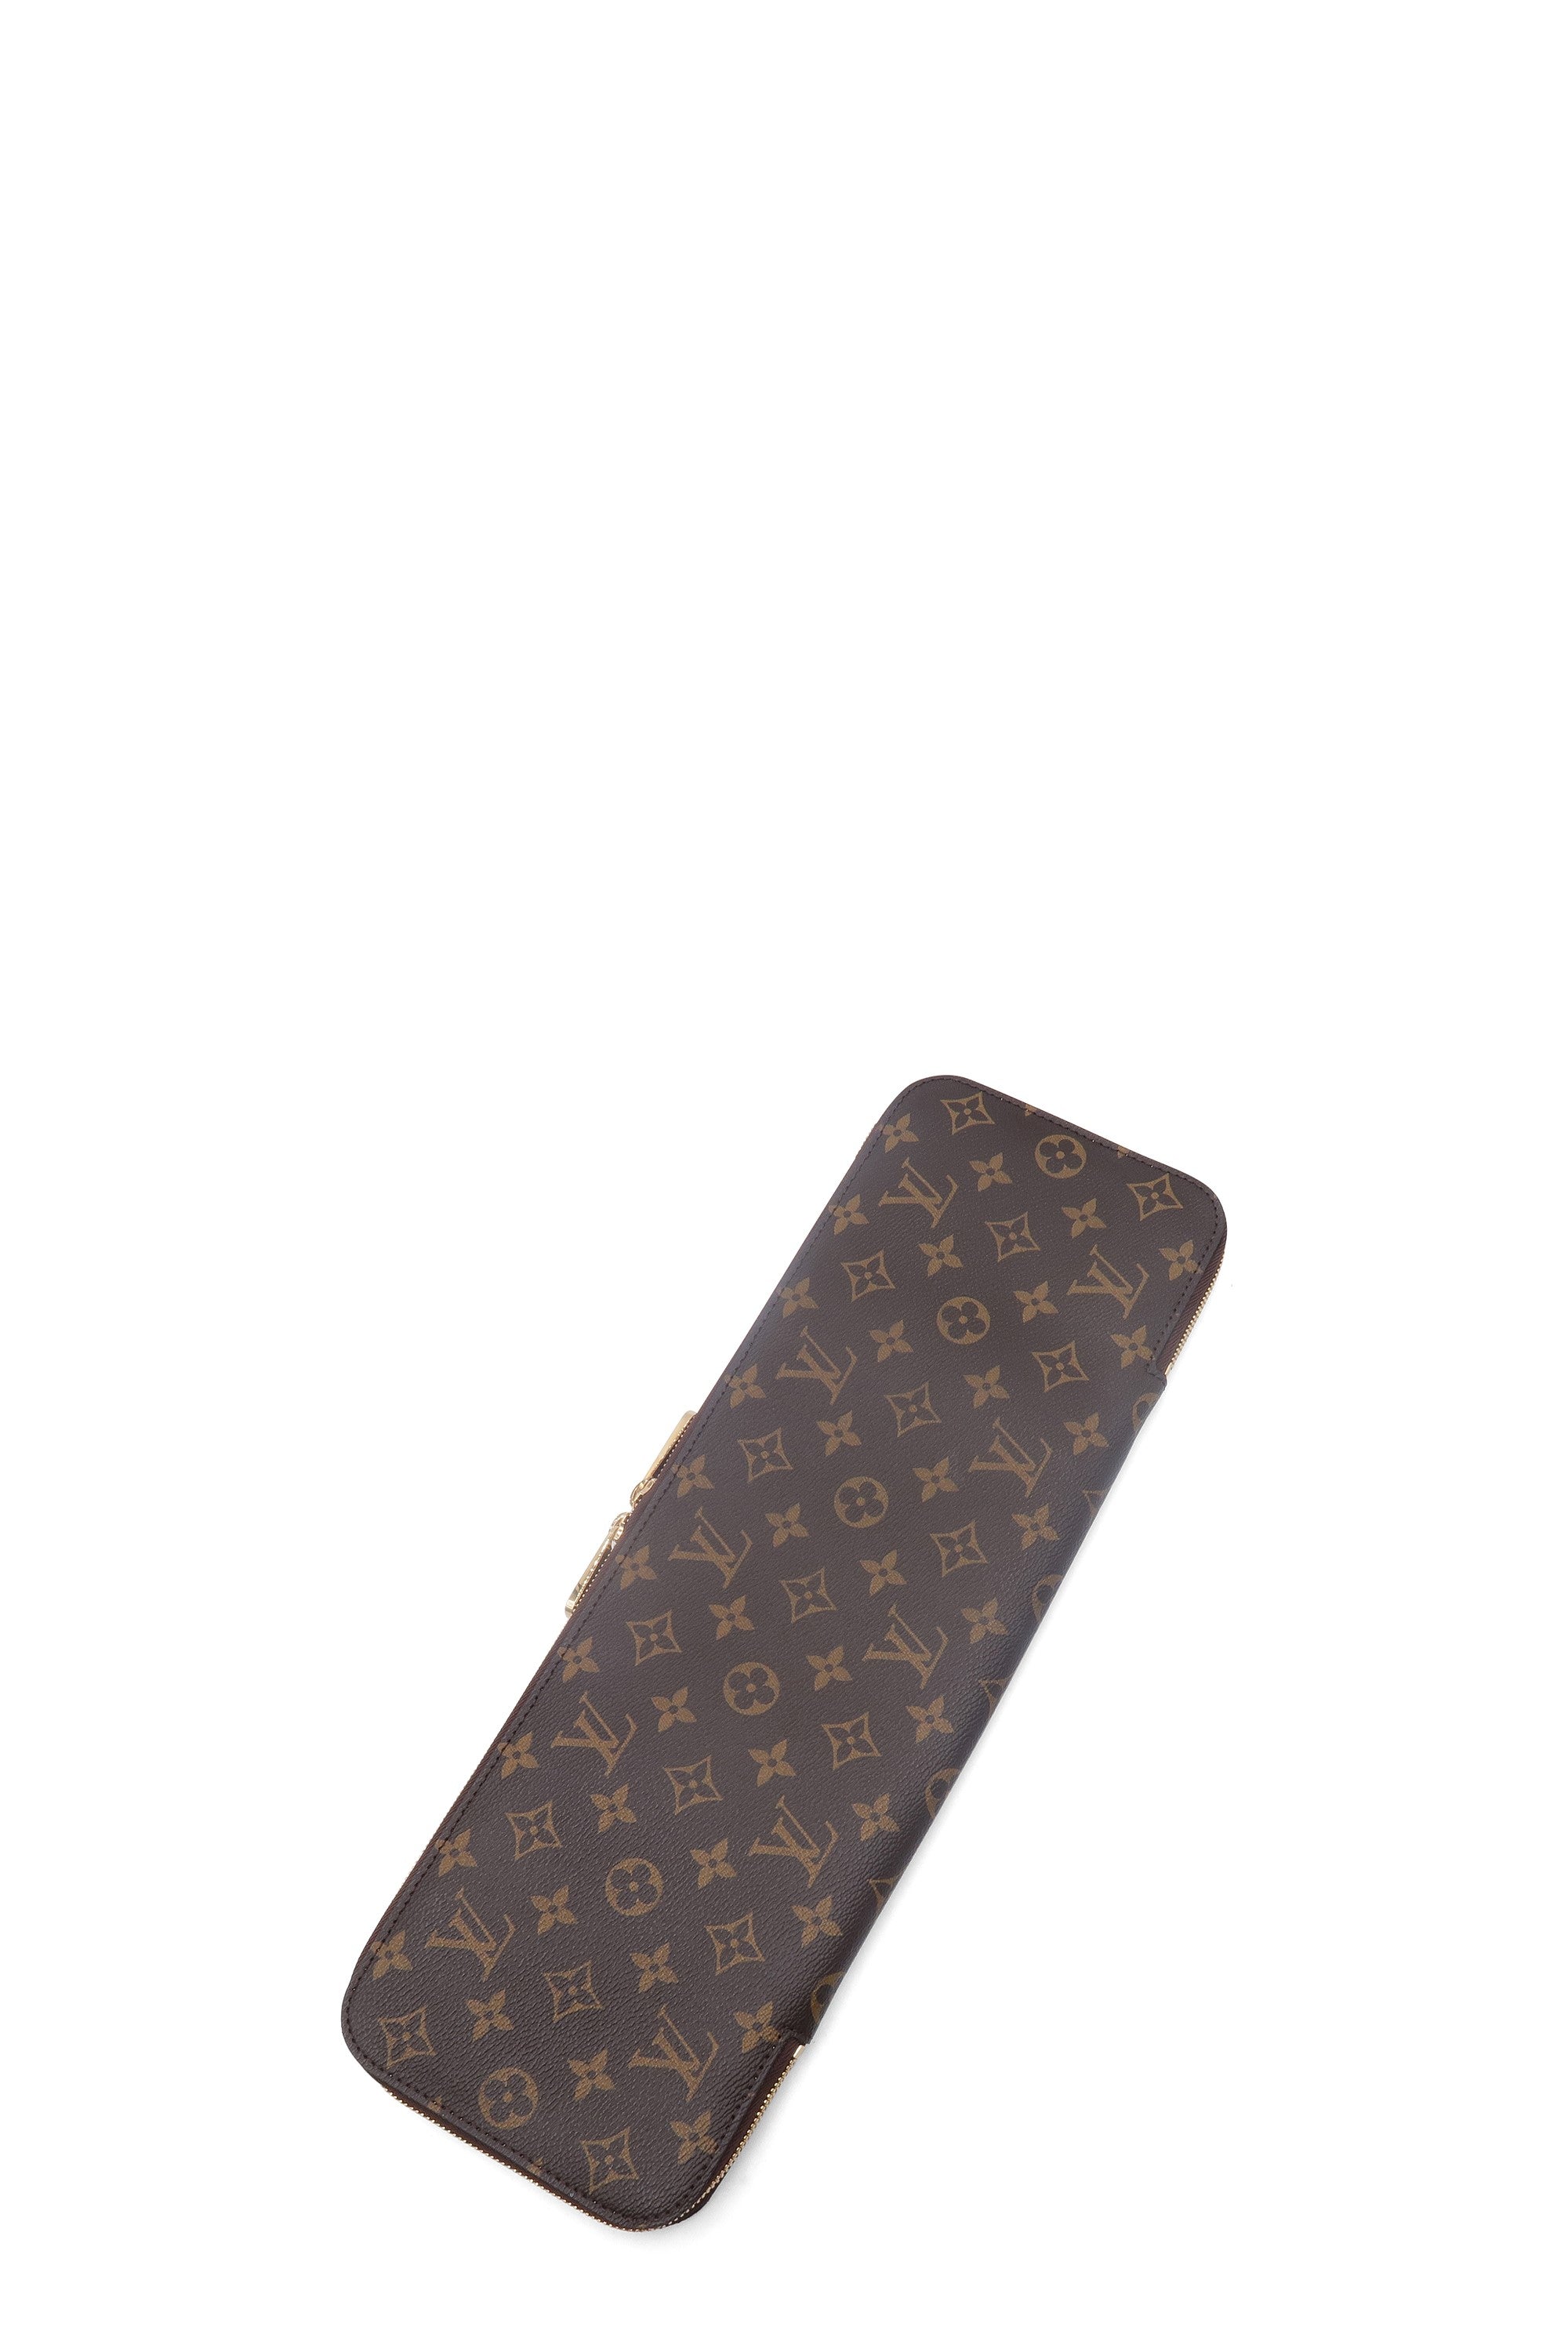 Auth RARE LOUIS VUITTON 5 Tie Cravat Leather Brown Monogram Case - LUXURY